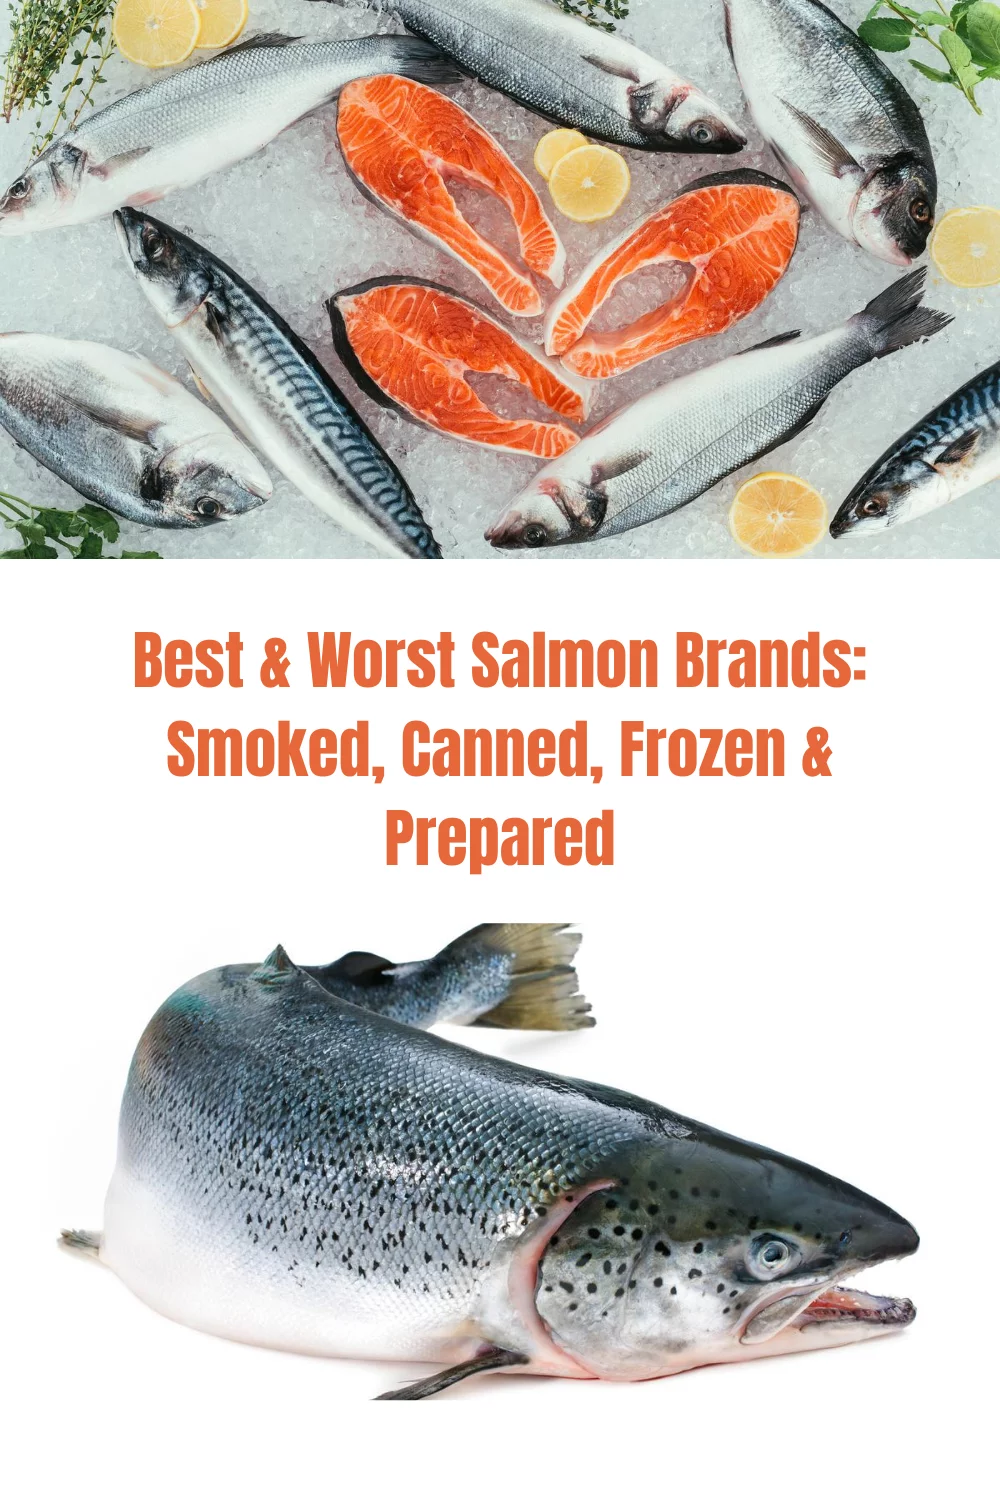 Best & Worst Salmon Brands--Smoked, Frozen, Canned & Prepared 1